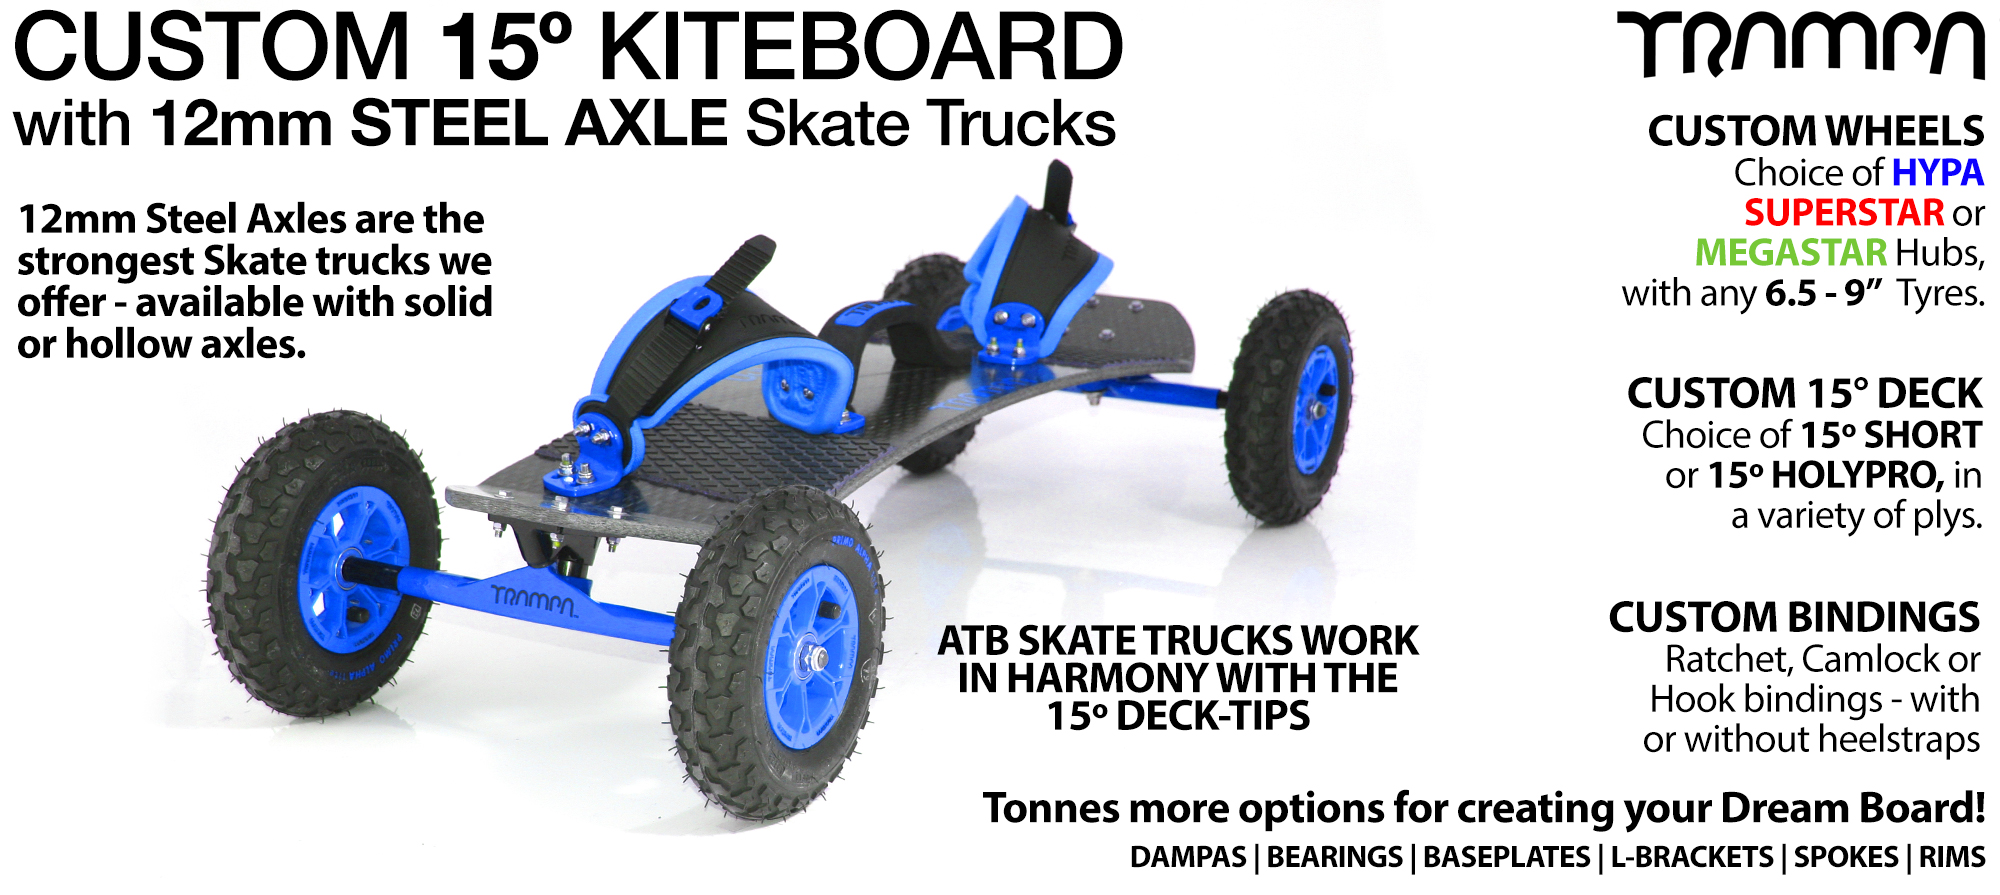 TRAMPA Kiteboard - 12mm Axle Skate Trucks 